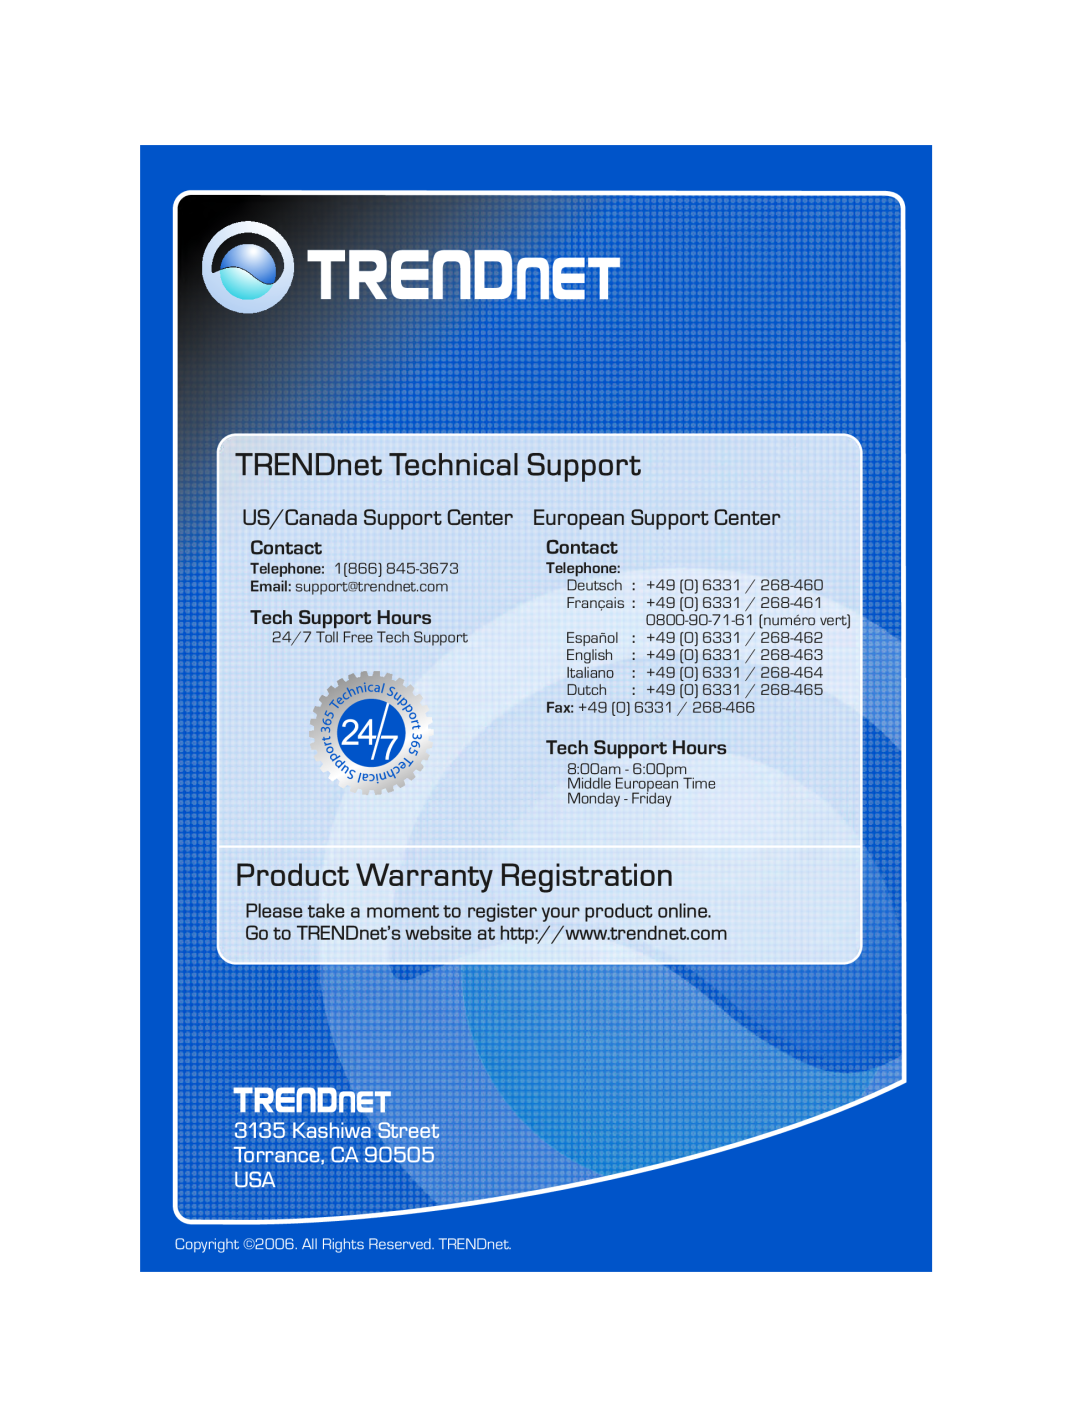 TRENDnet TK-205K manual TRENDnet Technical Support, Product Warranty Registration, Kashiwa Street Torrance, CA USA, Contact 